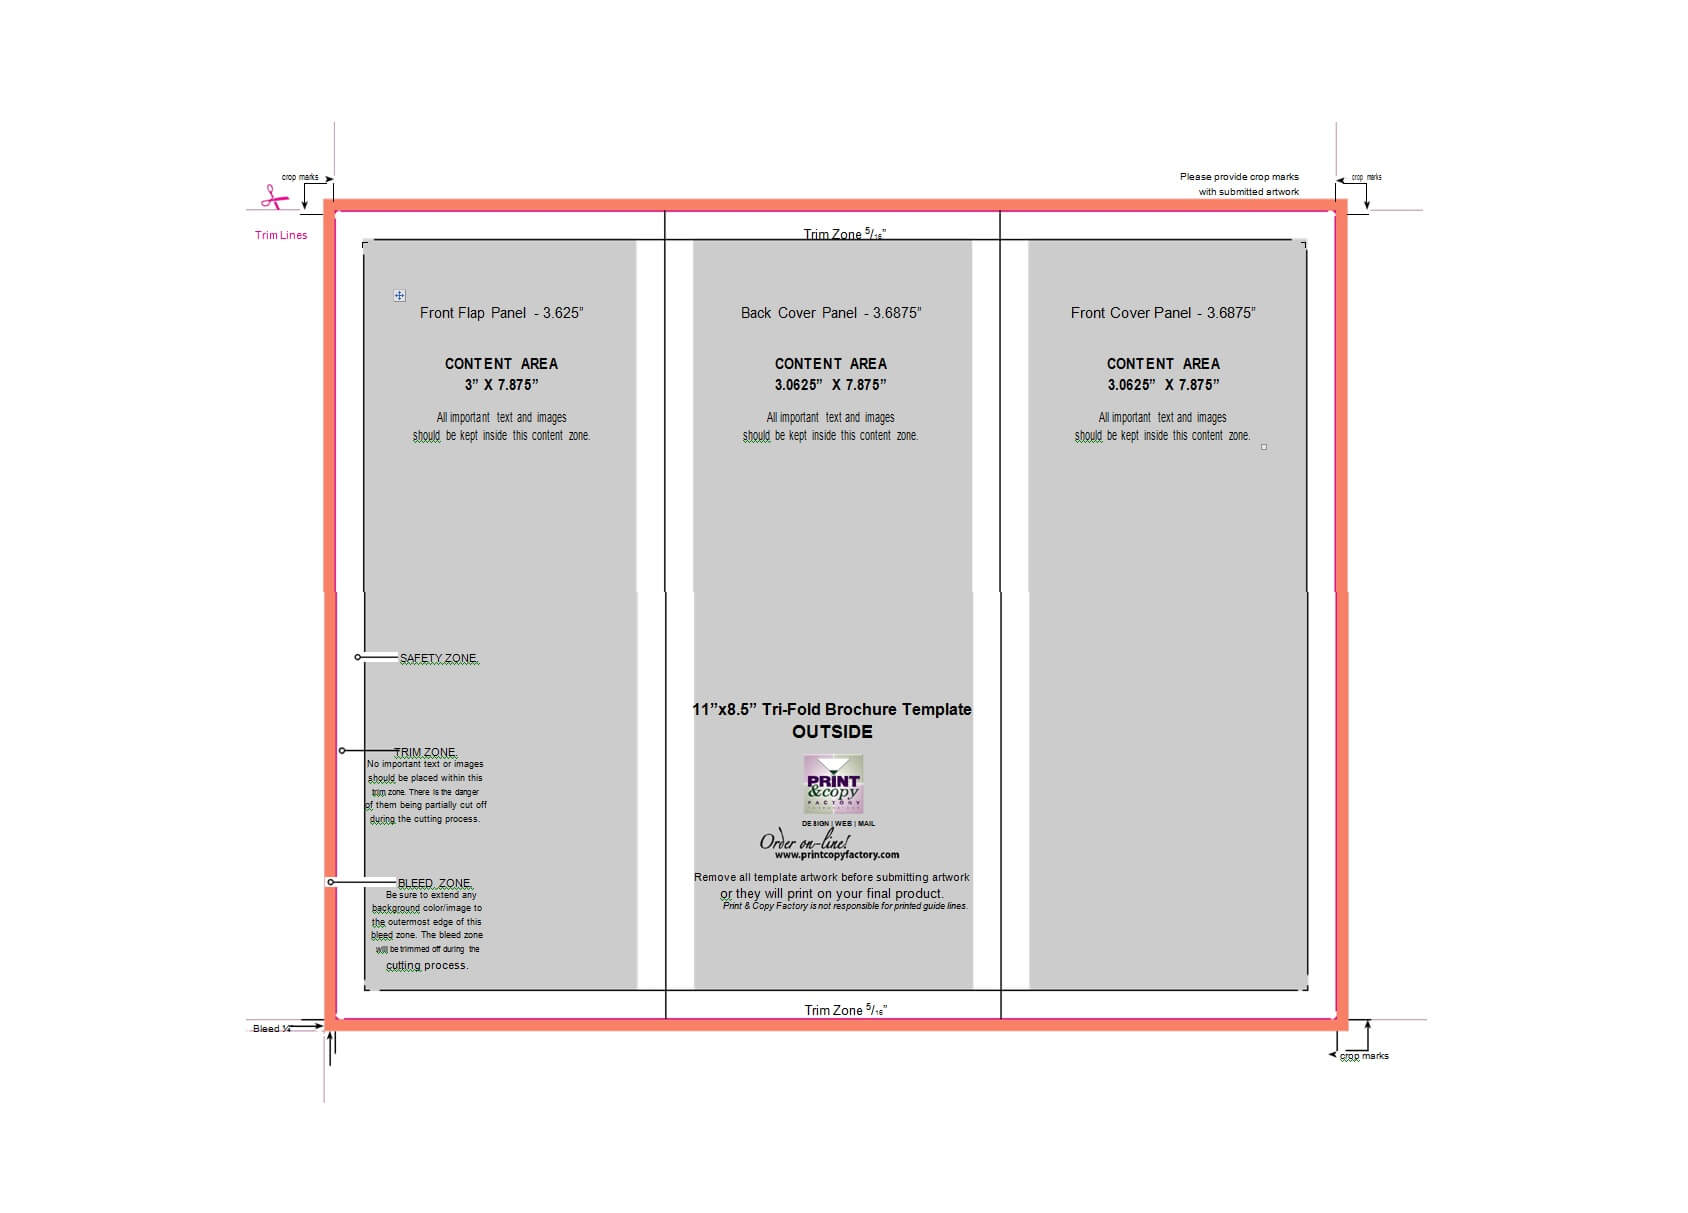 50 Free Pamphlet Templates [Word / Google Docs] ᐅ Templatelab Within Brochure Templates Google Docs